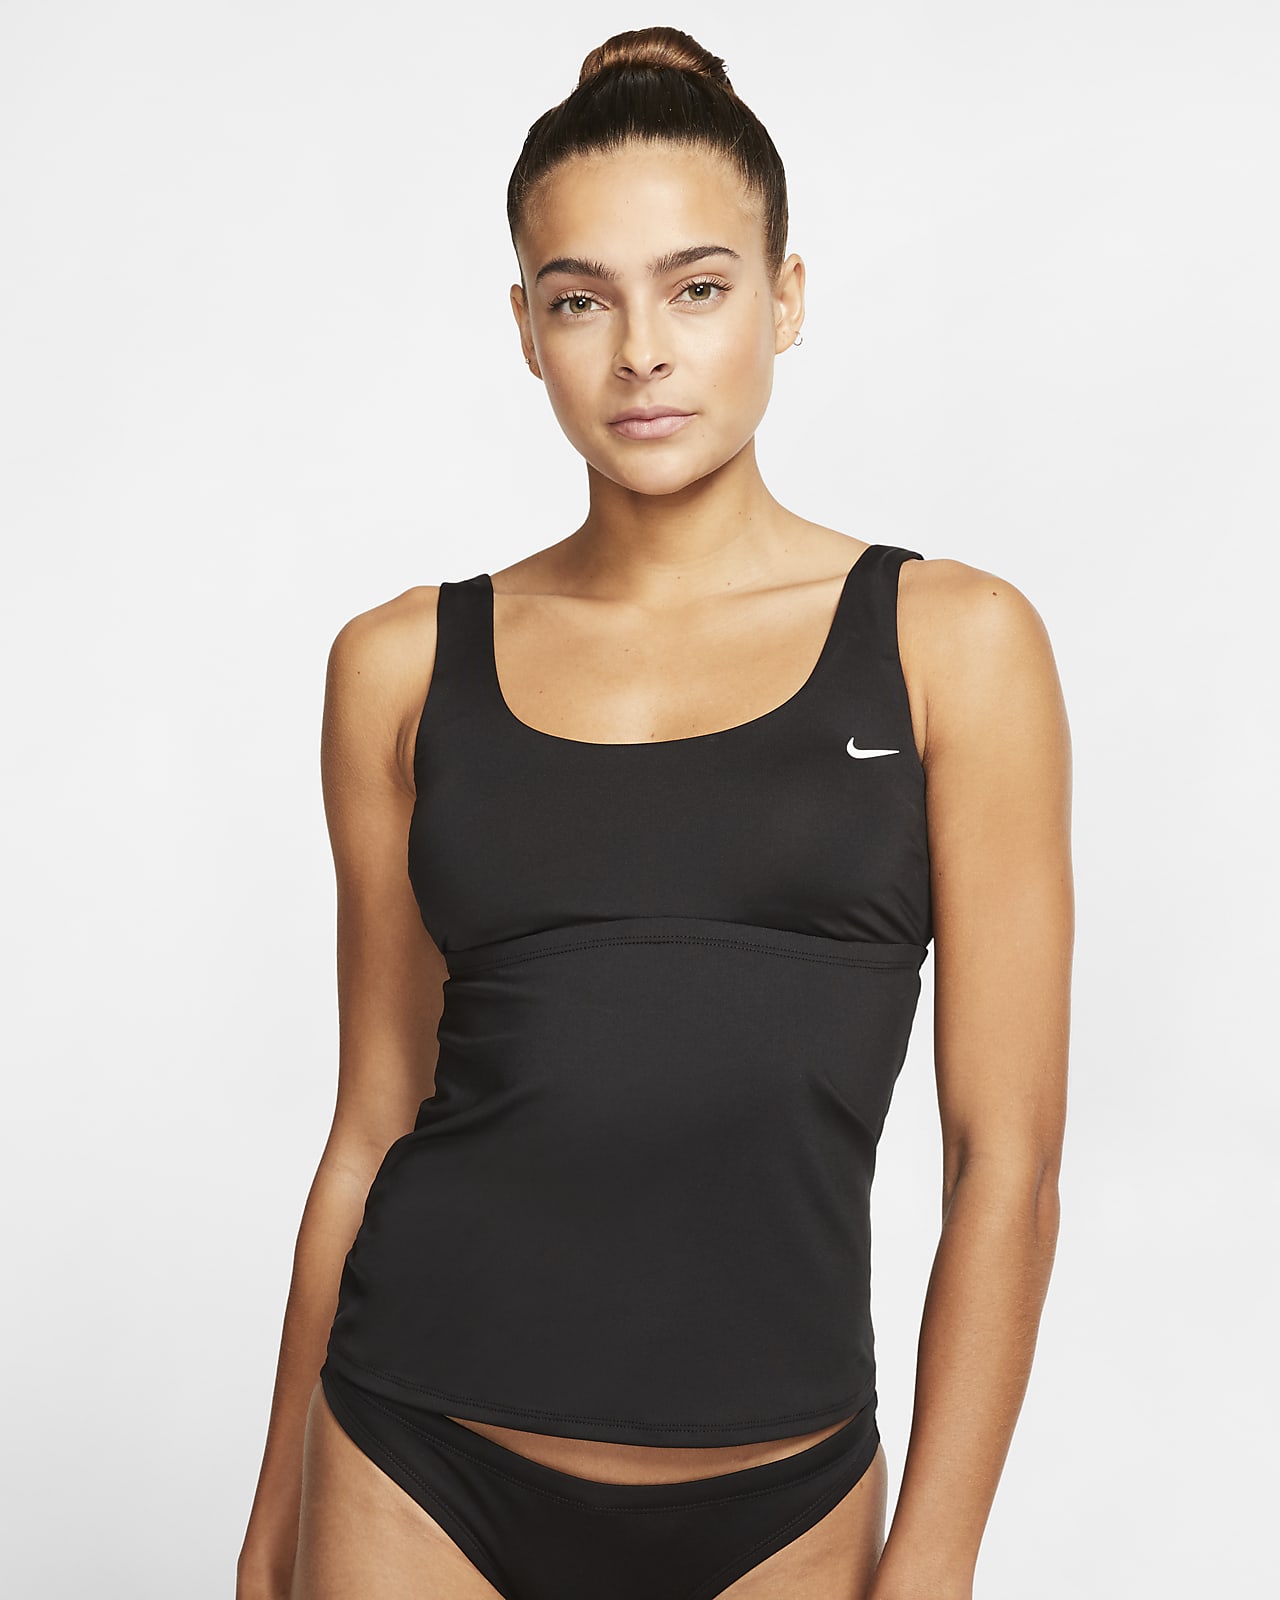 Prenda para la parte superior de traje de baño para mujer Nike Tankini. Nike .com